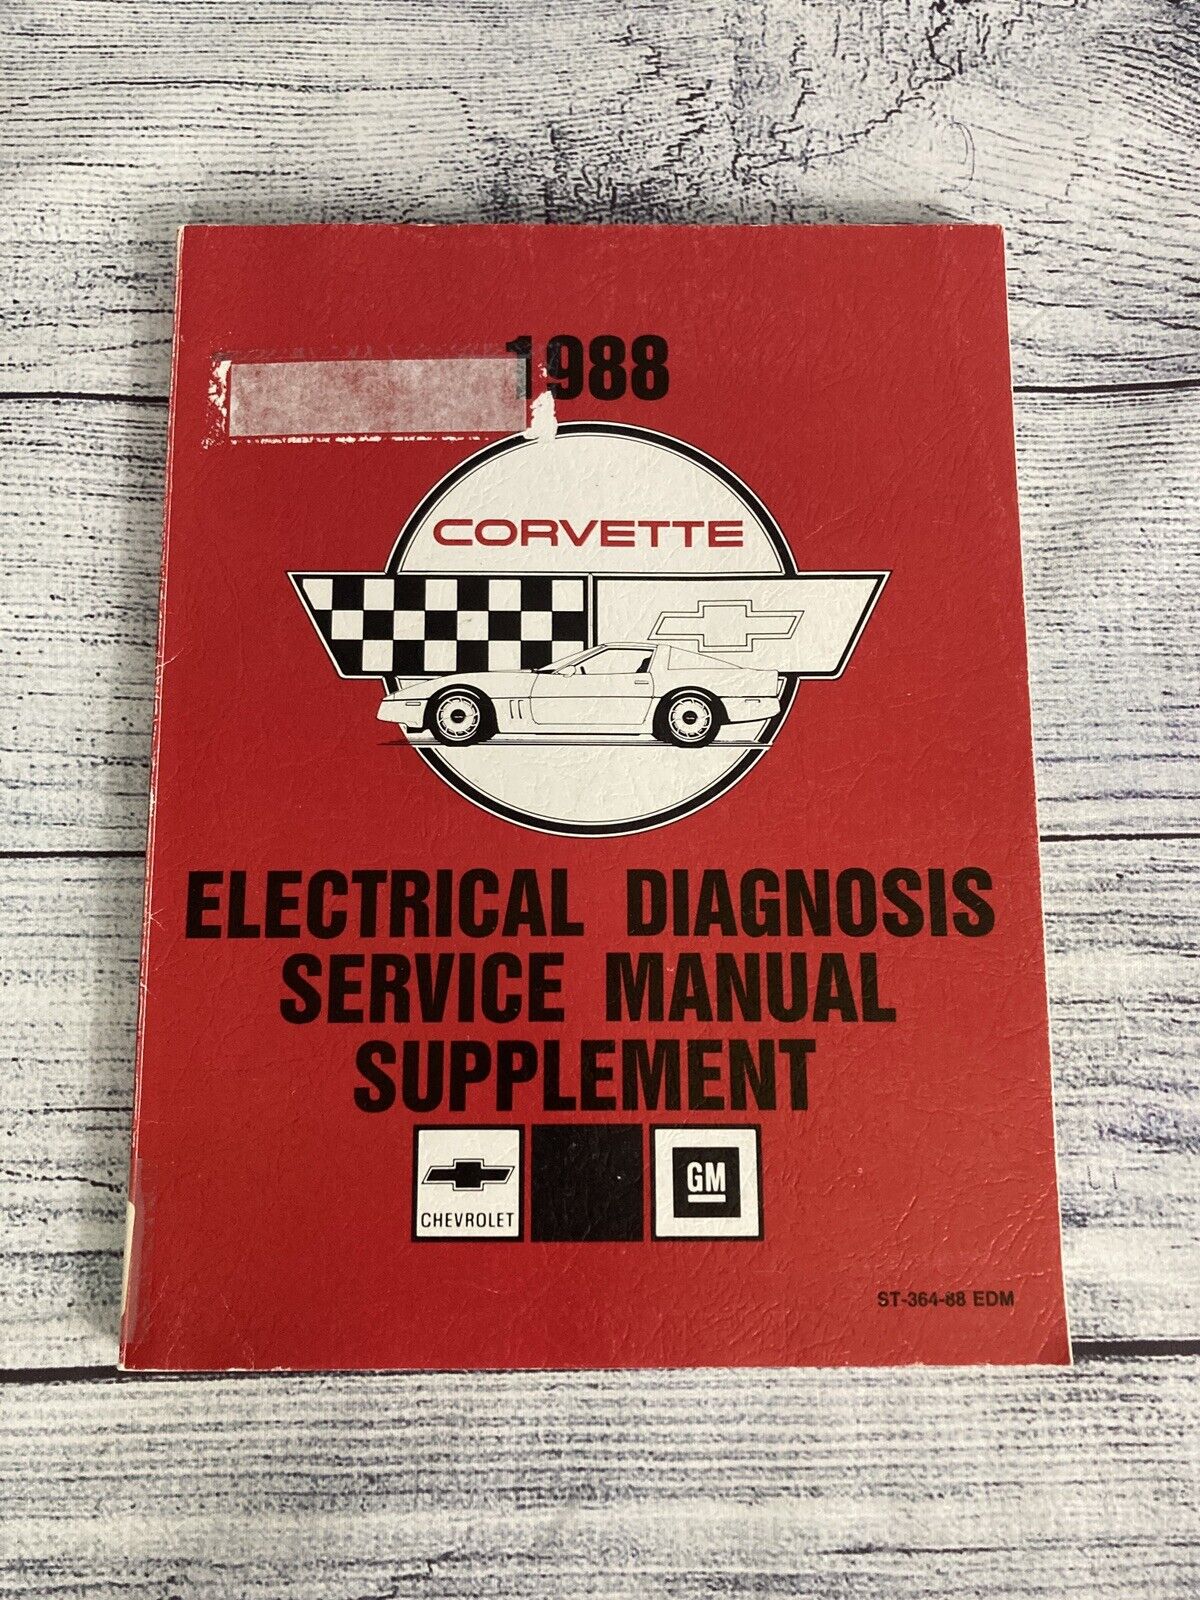 1988 Corvette Electrical Diagnosis Service Manual Supplement - Original Car